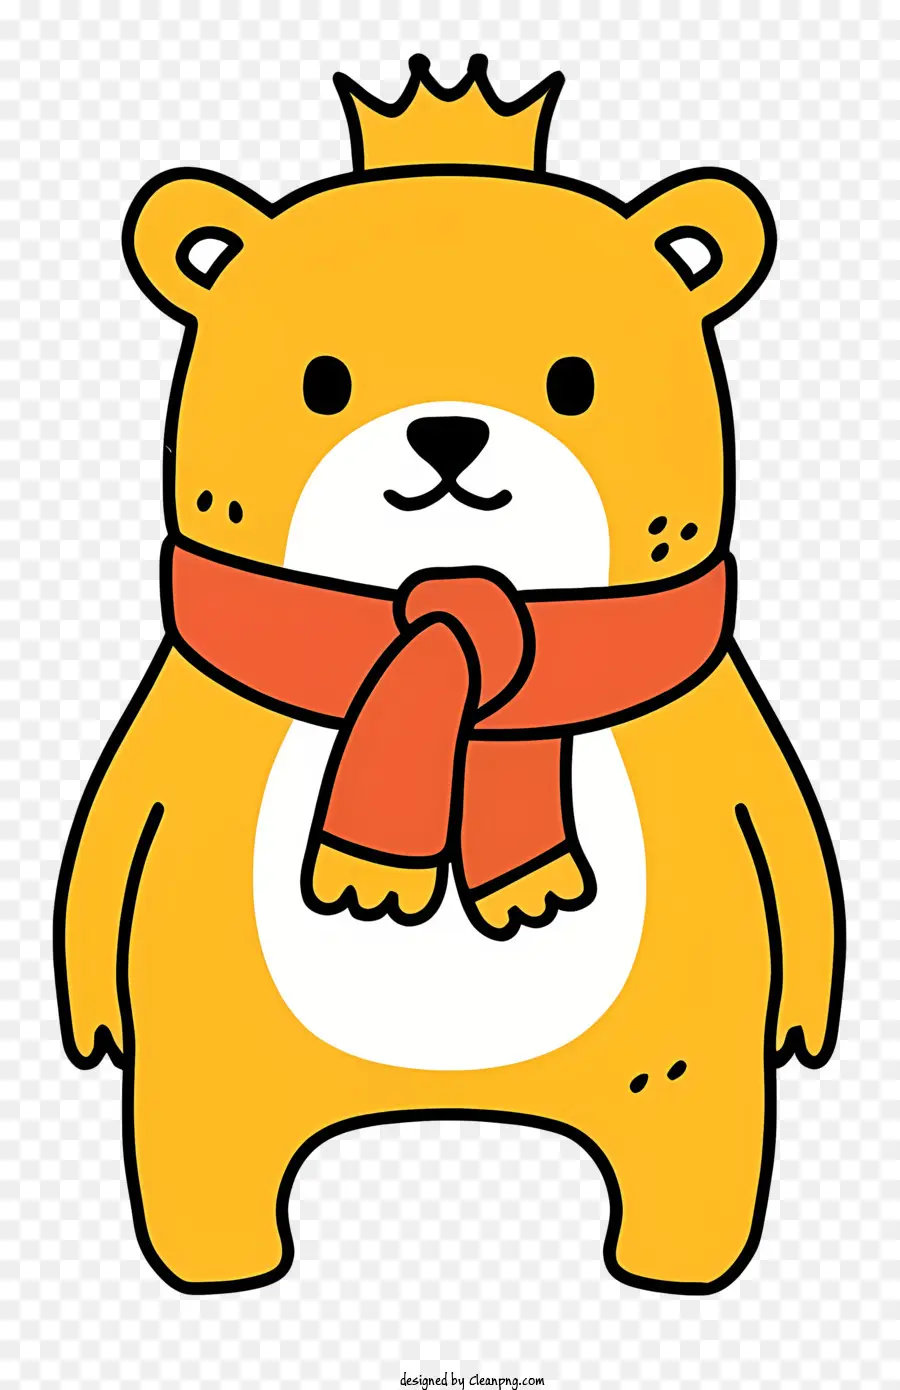 Cartoon Cartoon Bärer roter Schal lächelnder Bärenbrauner Mantel - Cartoonbär mit rotem Schal, lächelte mit geschlossenen Augen